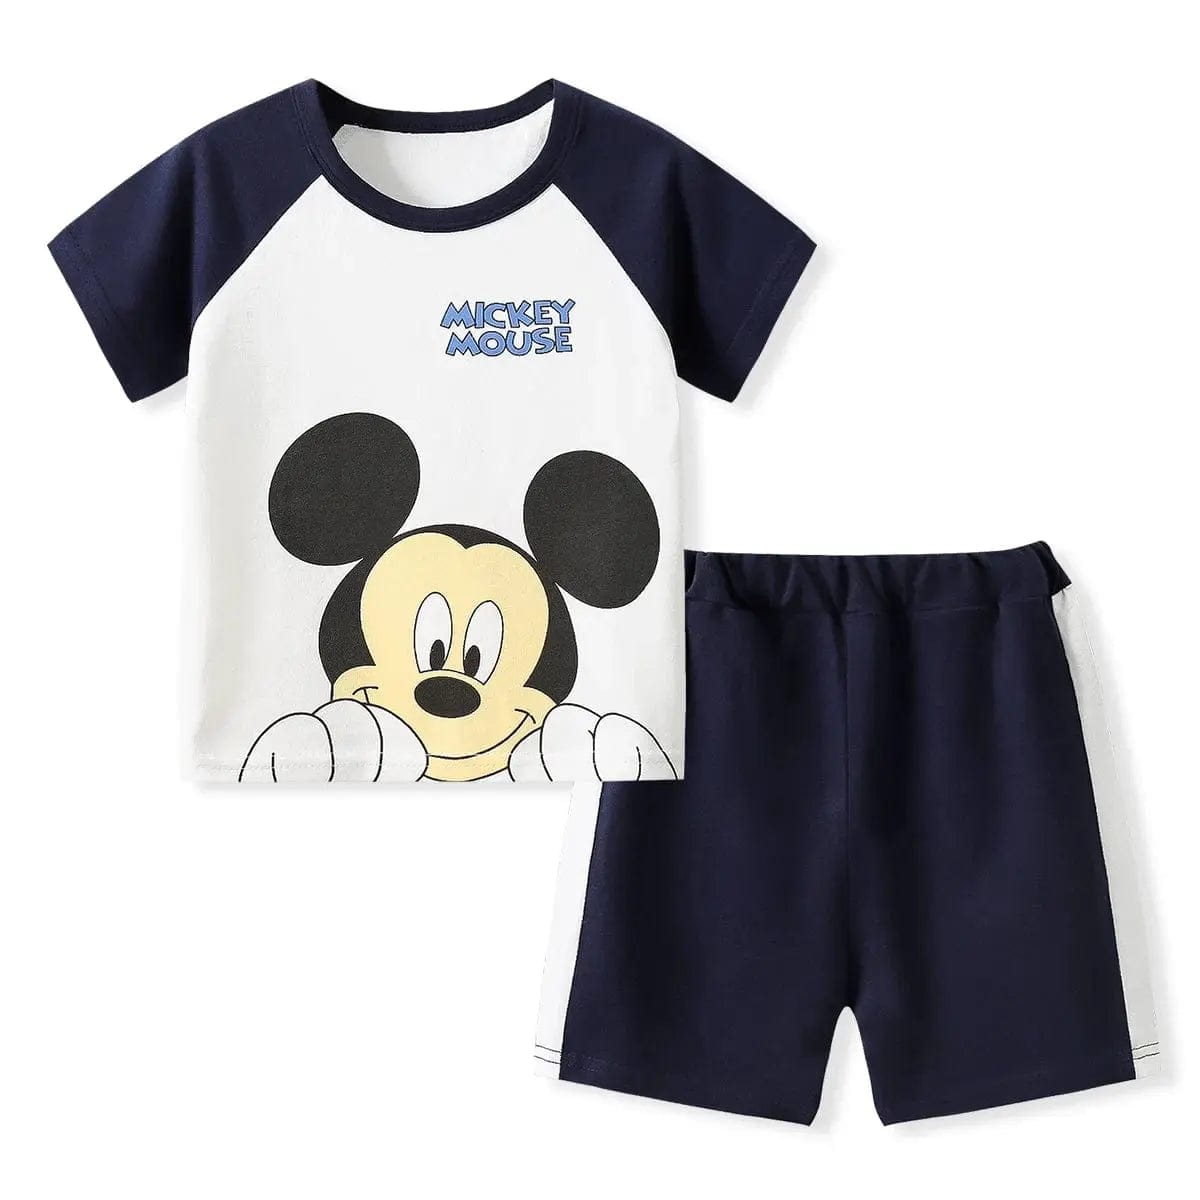 Kids Leisure Mickey Mouse Shirt Set - Essentialshouses